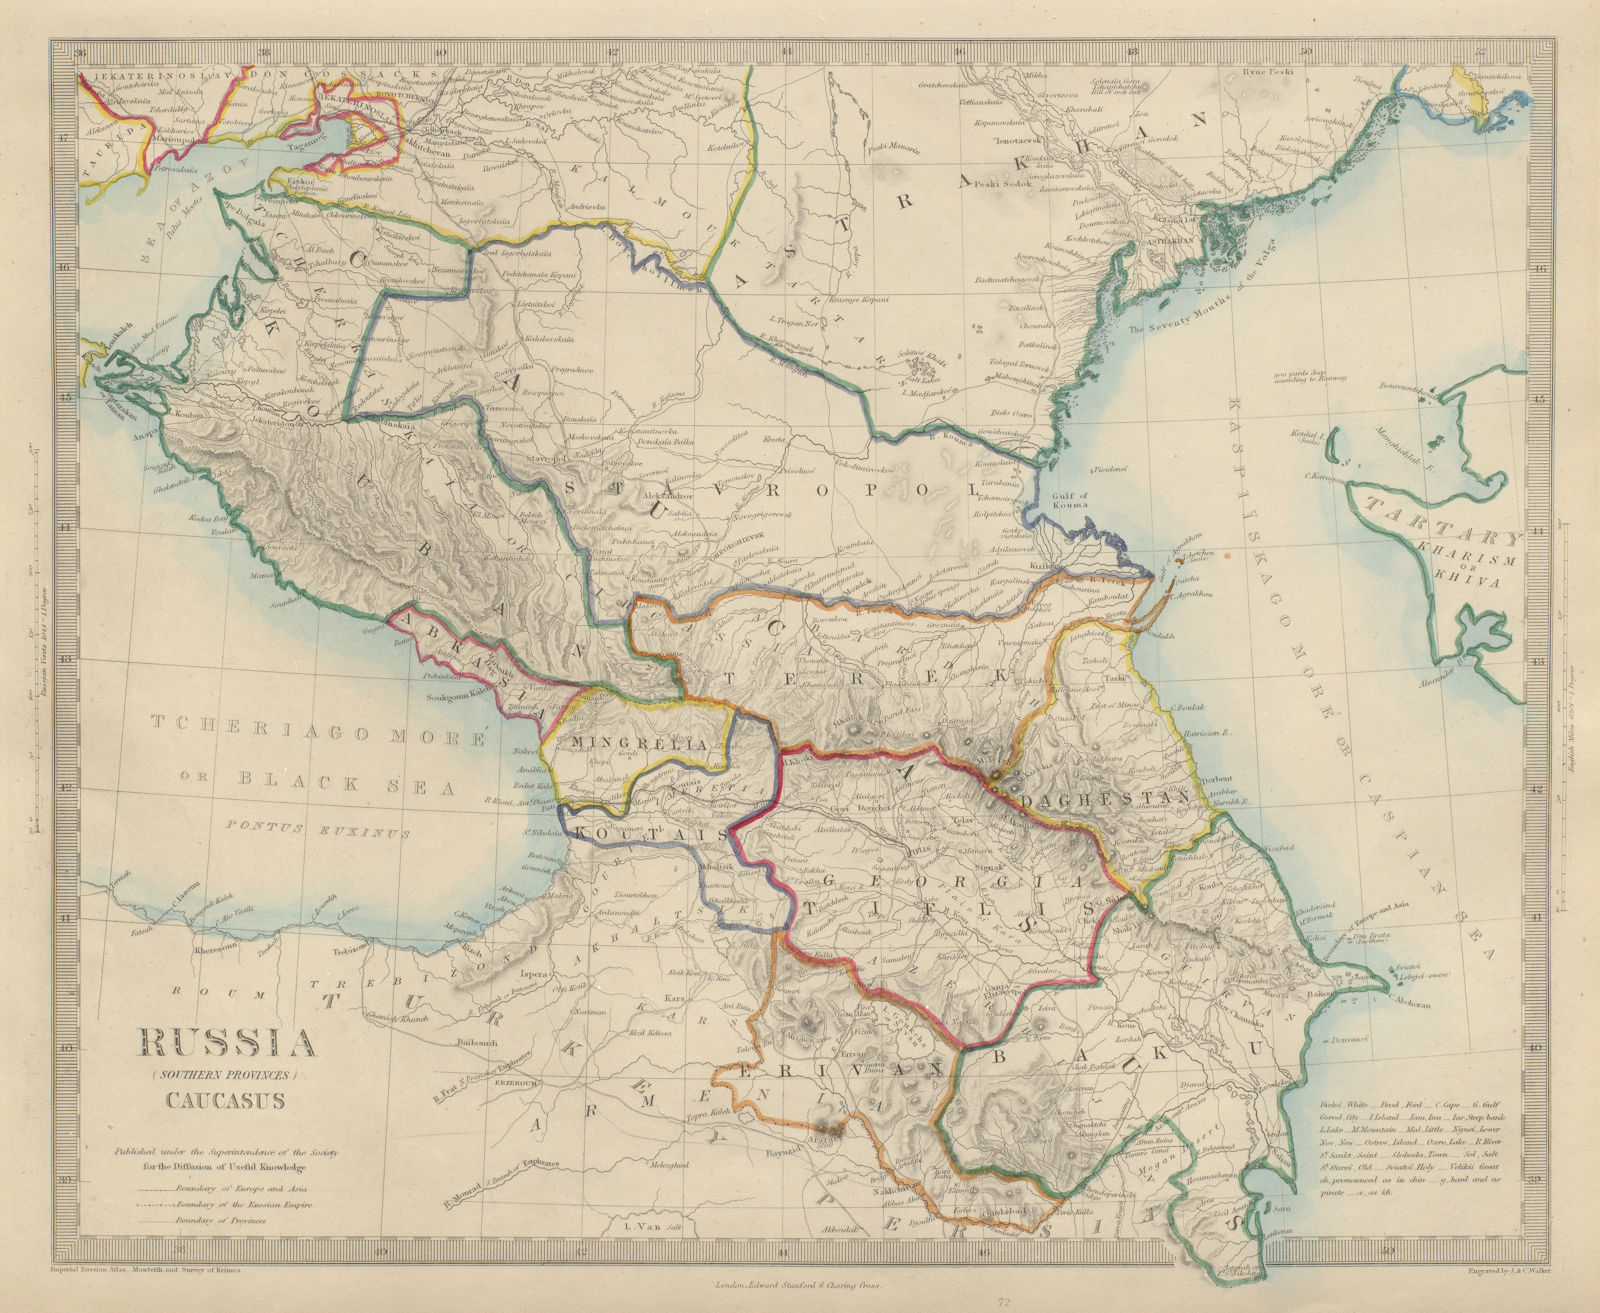 CAUCASUS. Russia Circassia Astrakhan Georgia Azerbaijan Armenia. SDUK 1874 map